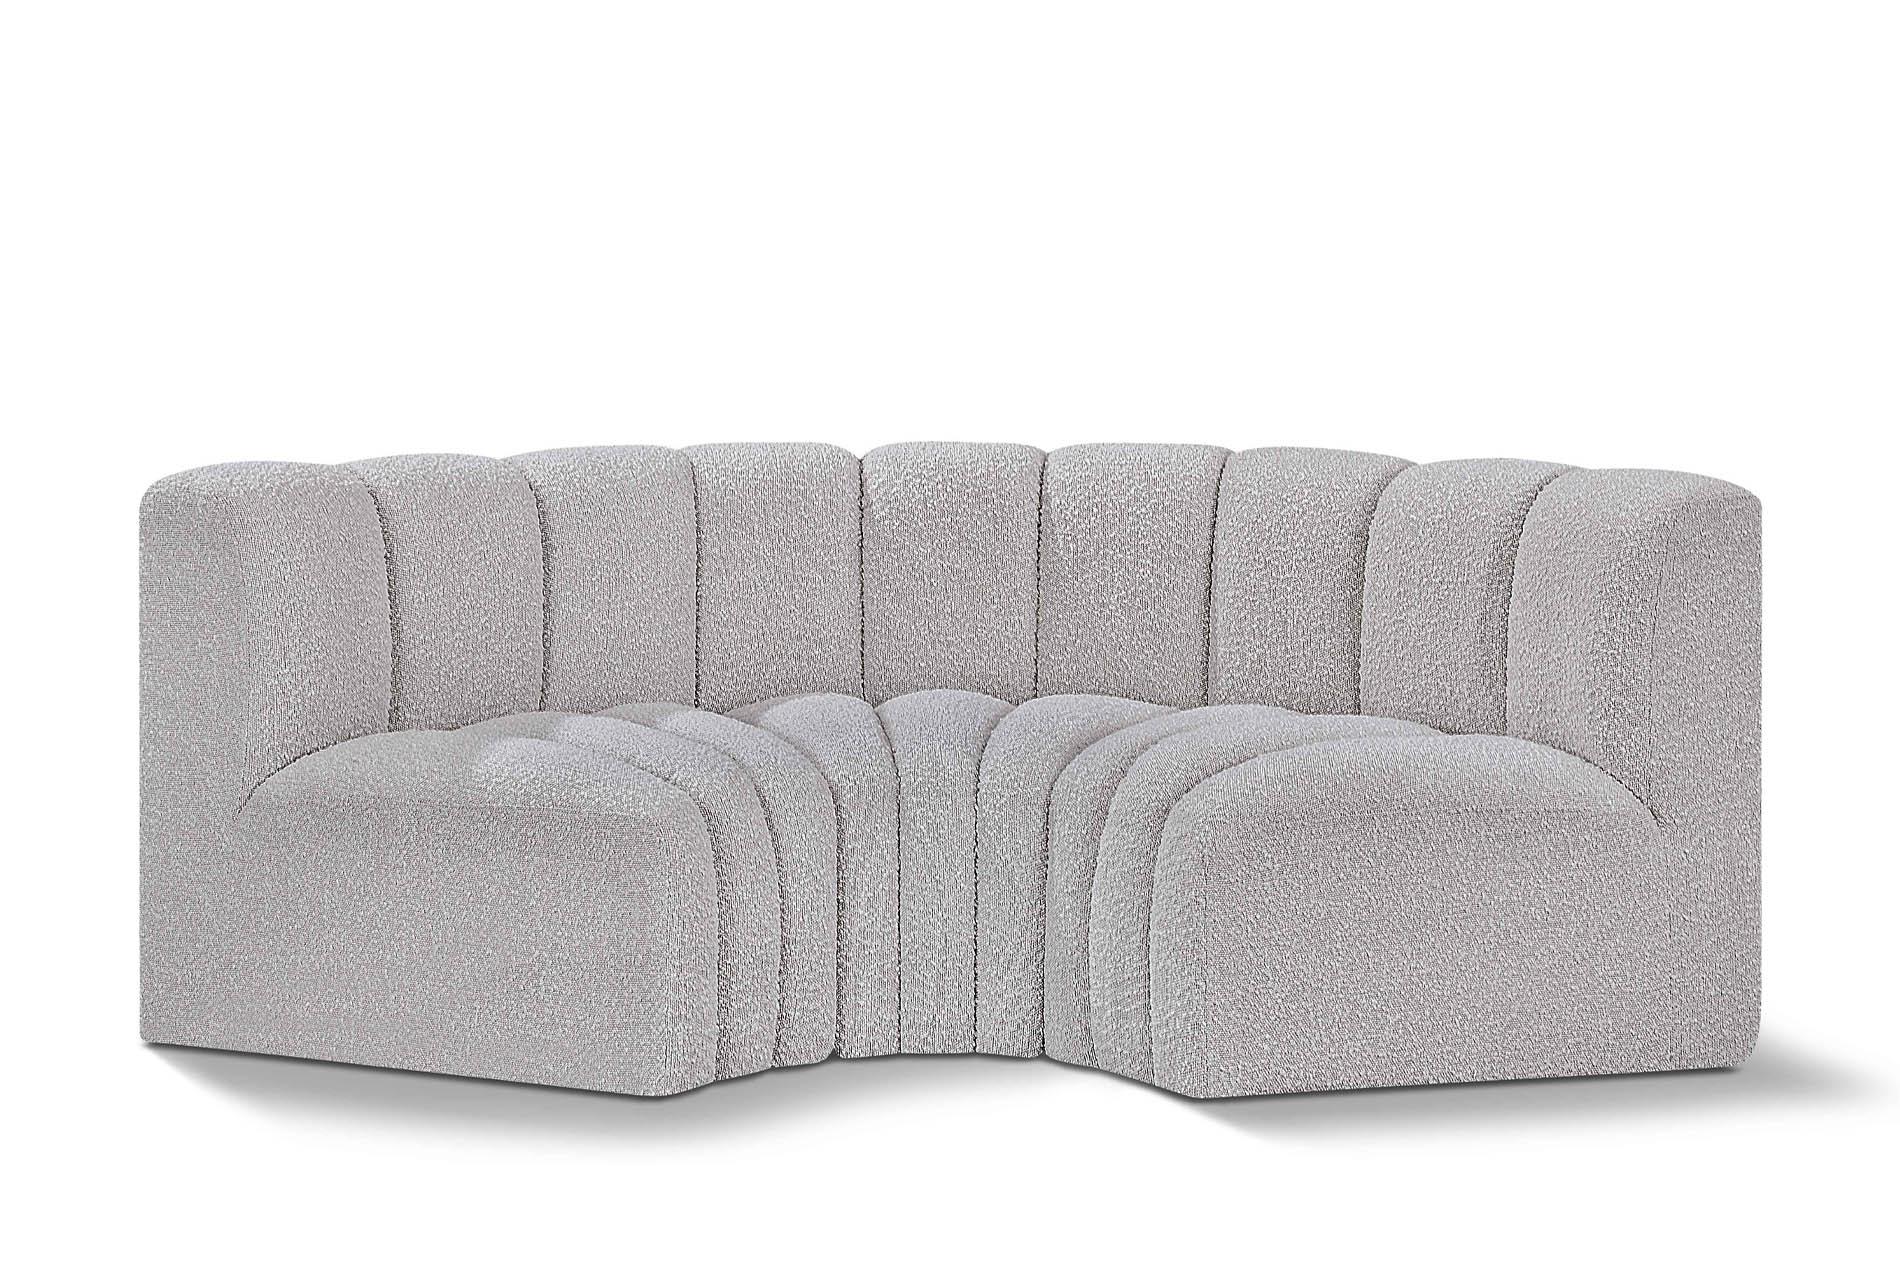 Contemporary, Modern Modular Sectional Sofa ARC 102Grey-S3C 102Grey-S3C in Gray 